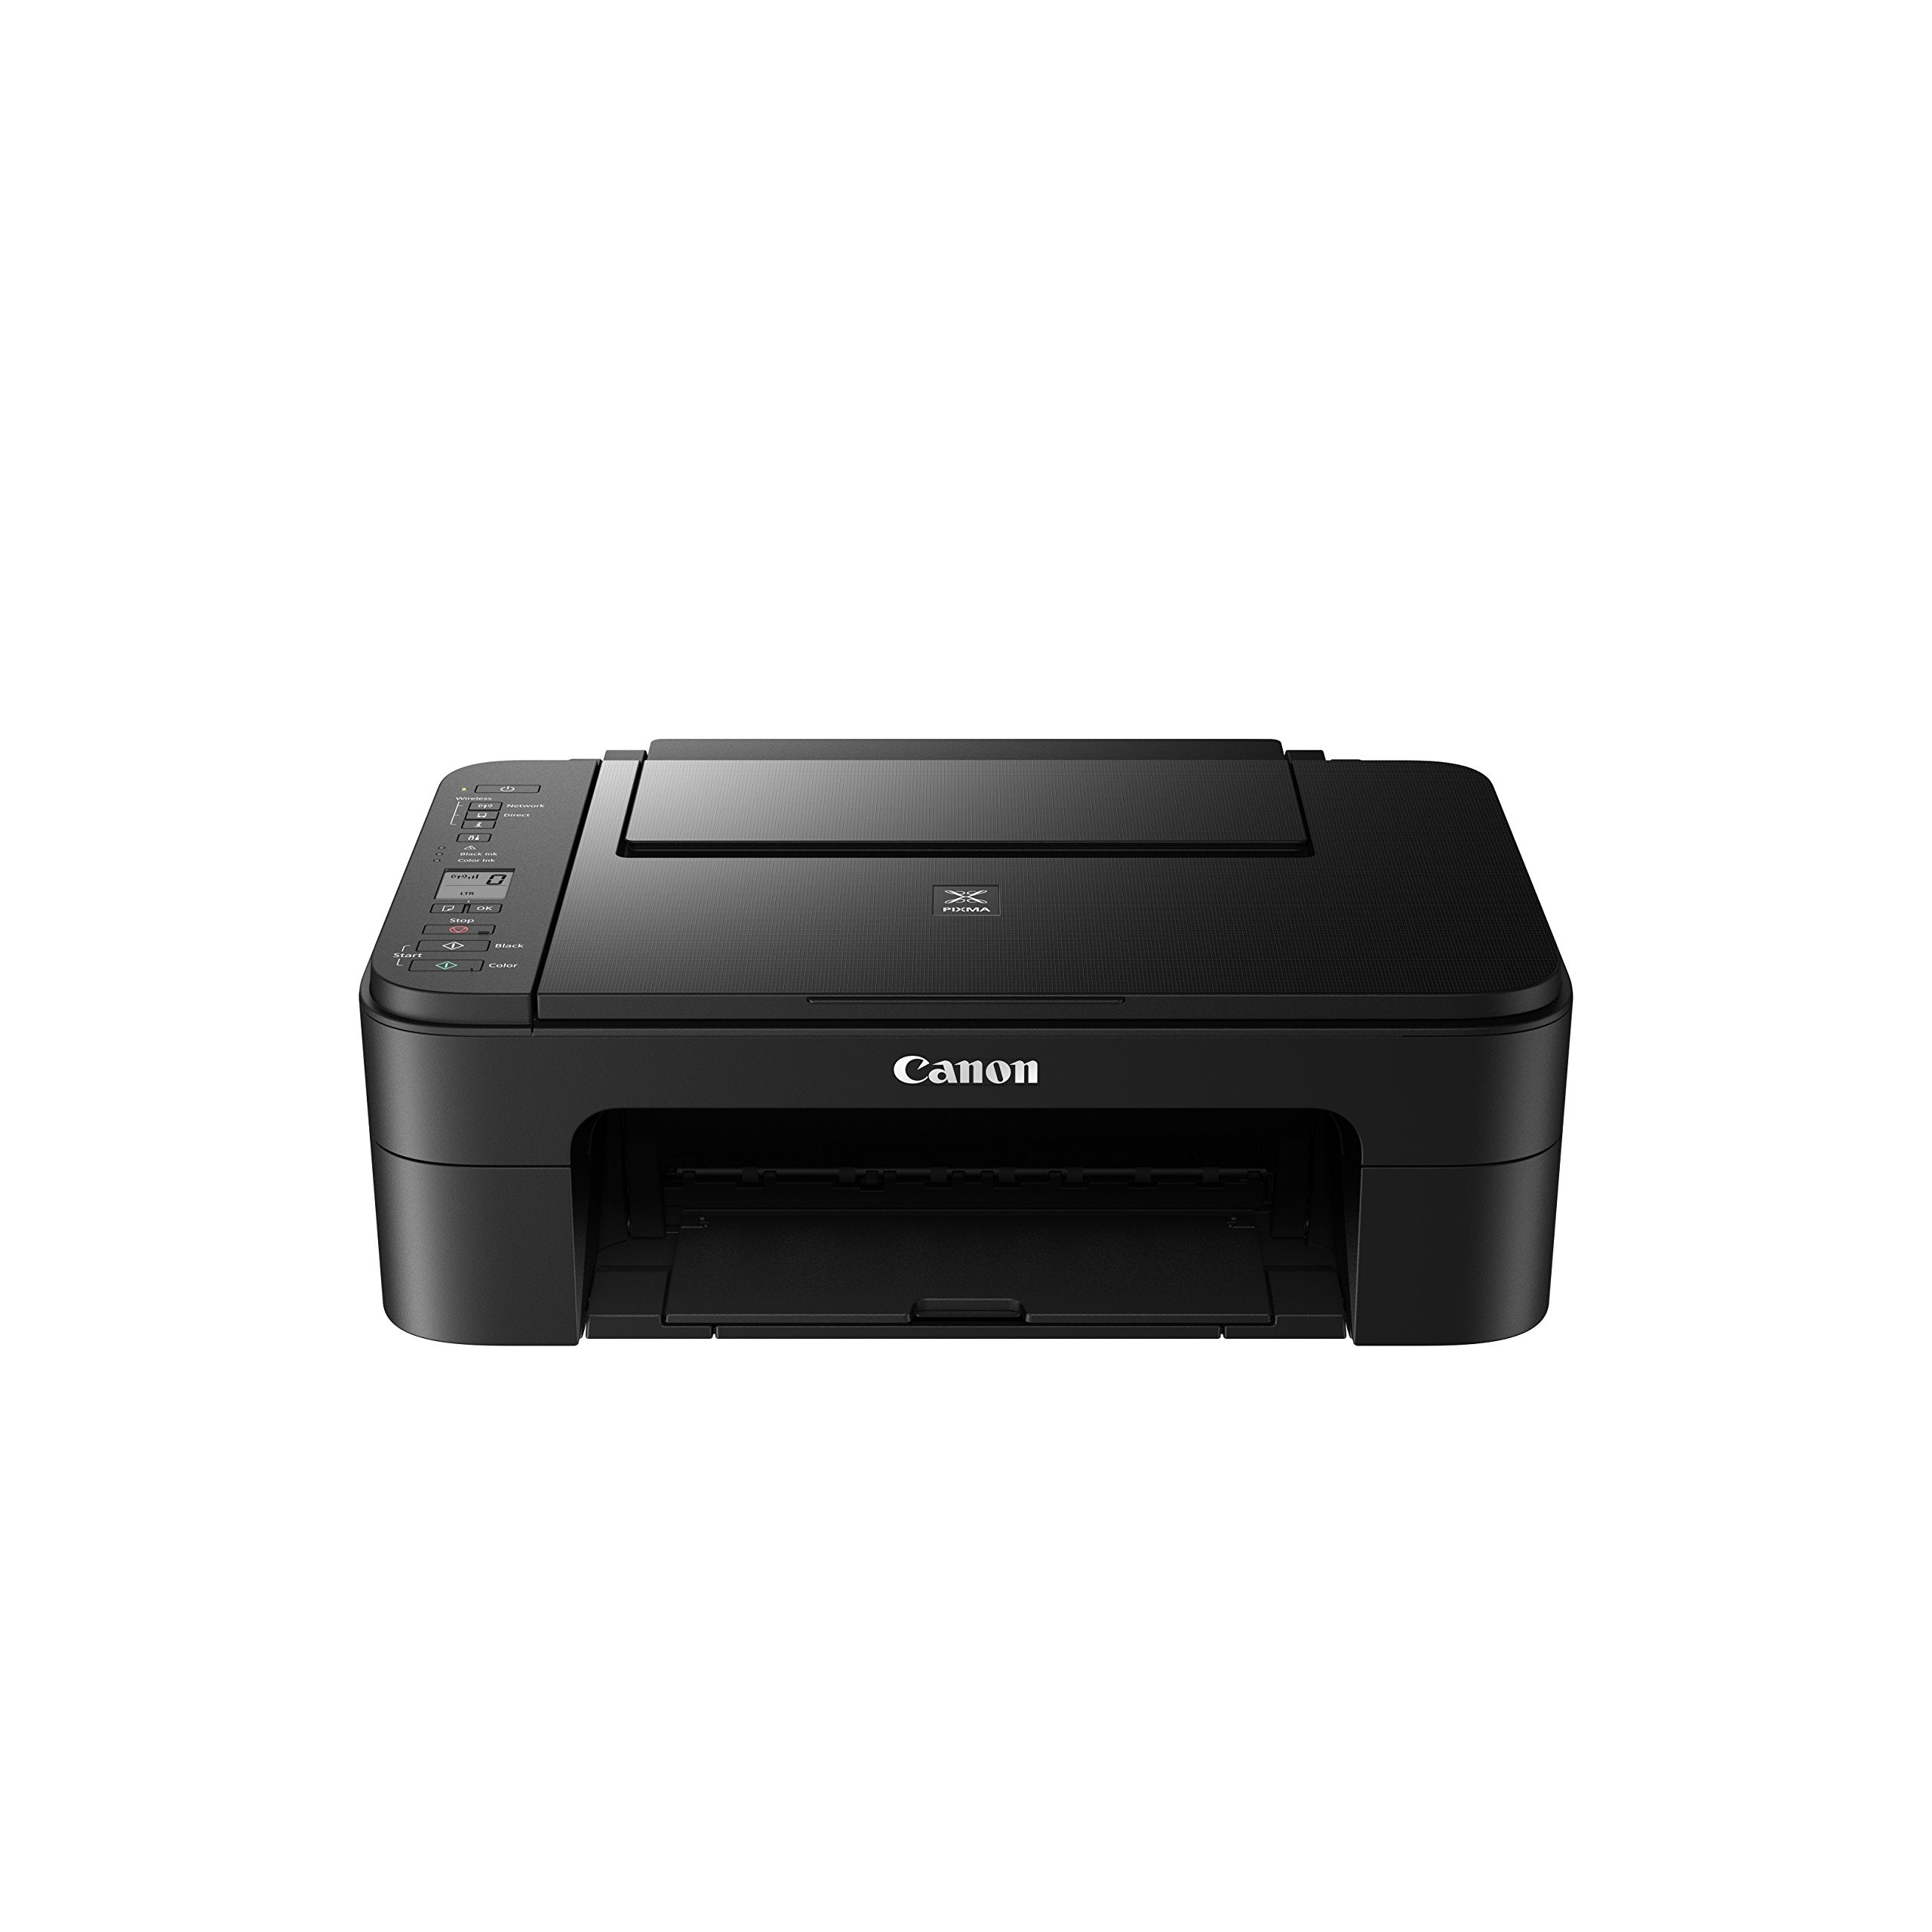 Canon TS3150 PIXMA All-in-One Inkjet Printer - Black